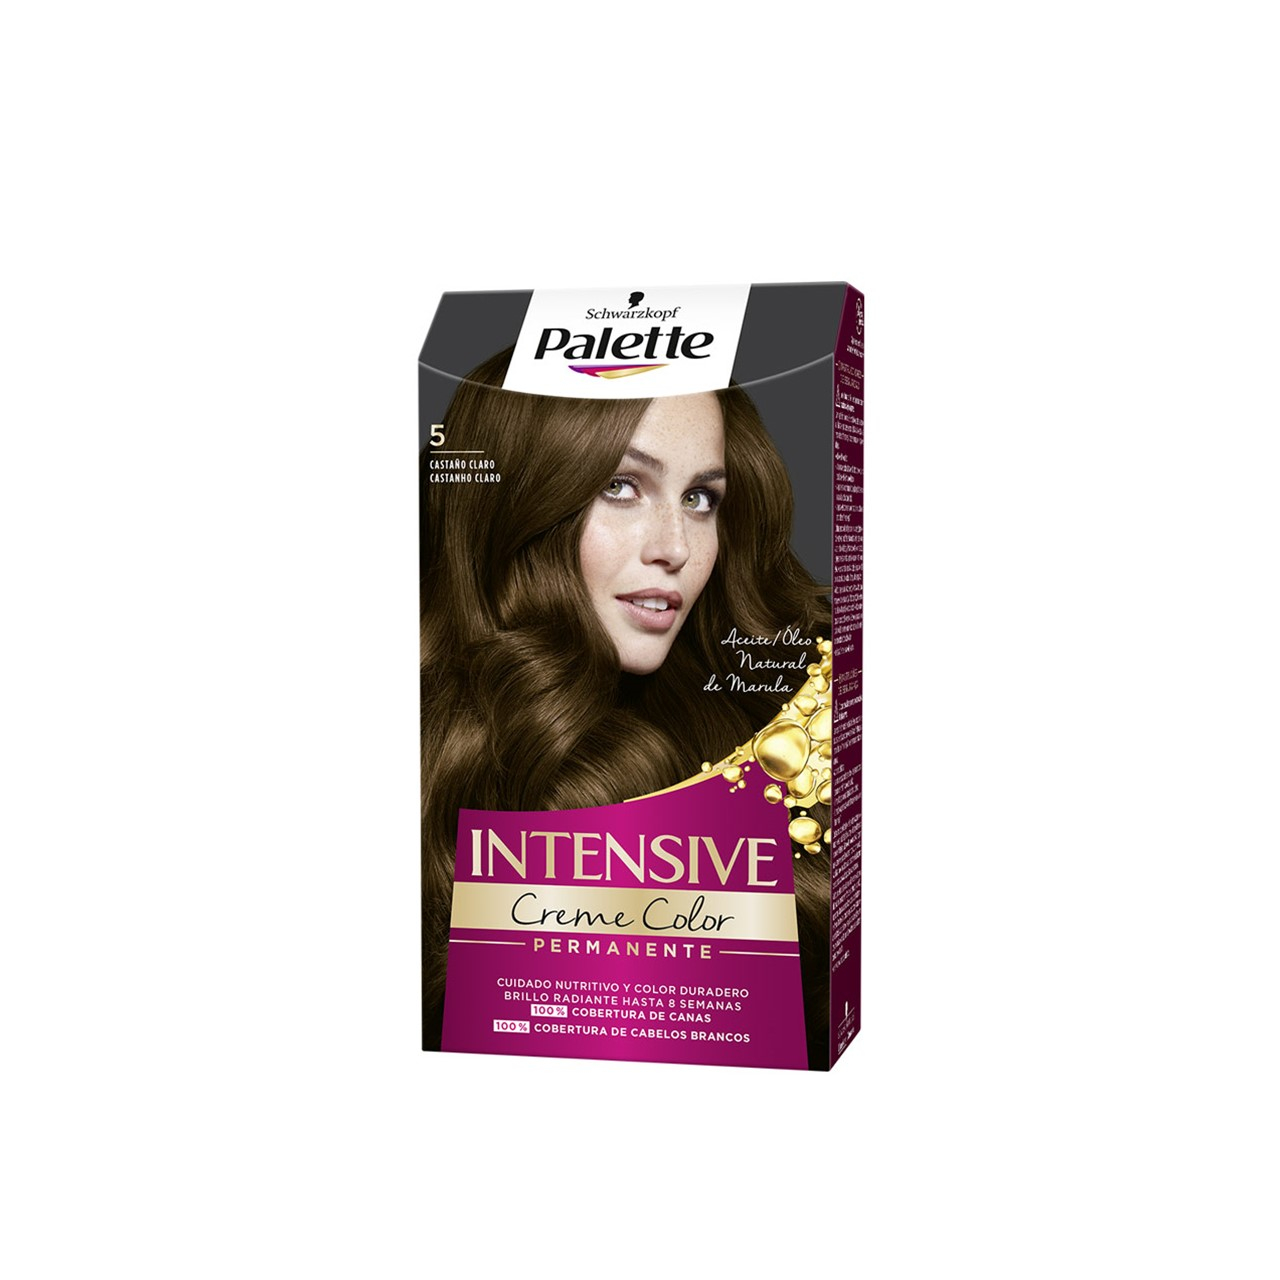 Schwarzkopf Palette Intensive Creme Color Permanent Hair Dye 5 Light Brown